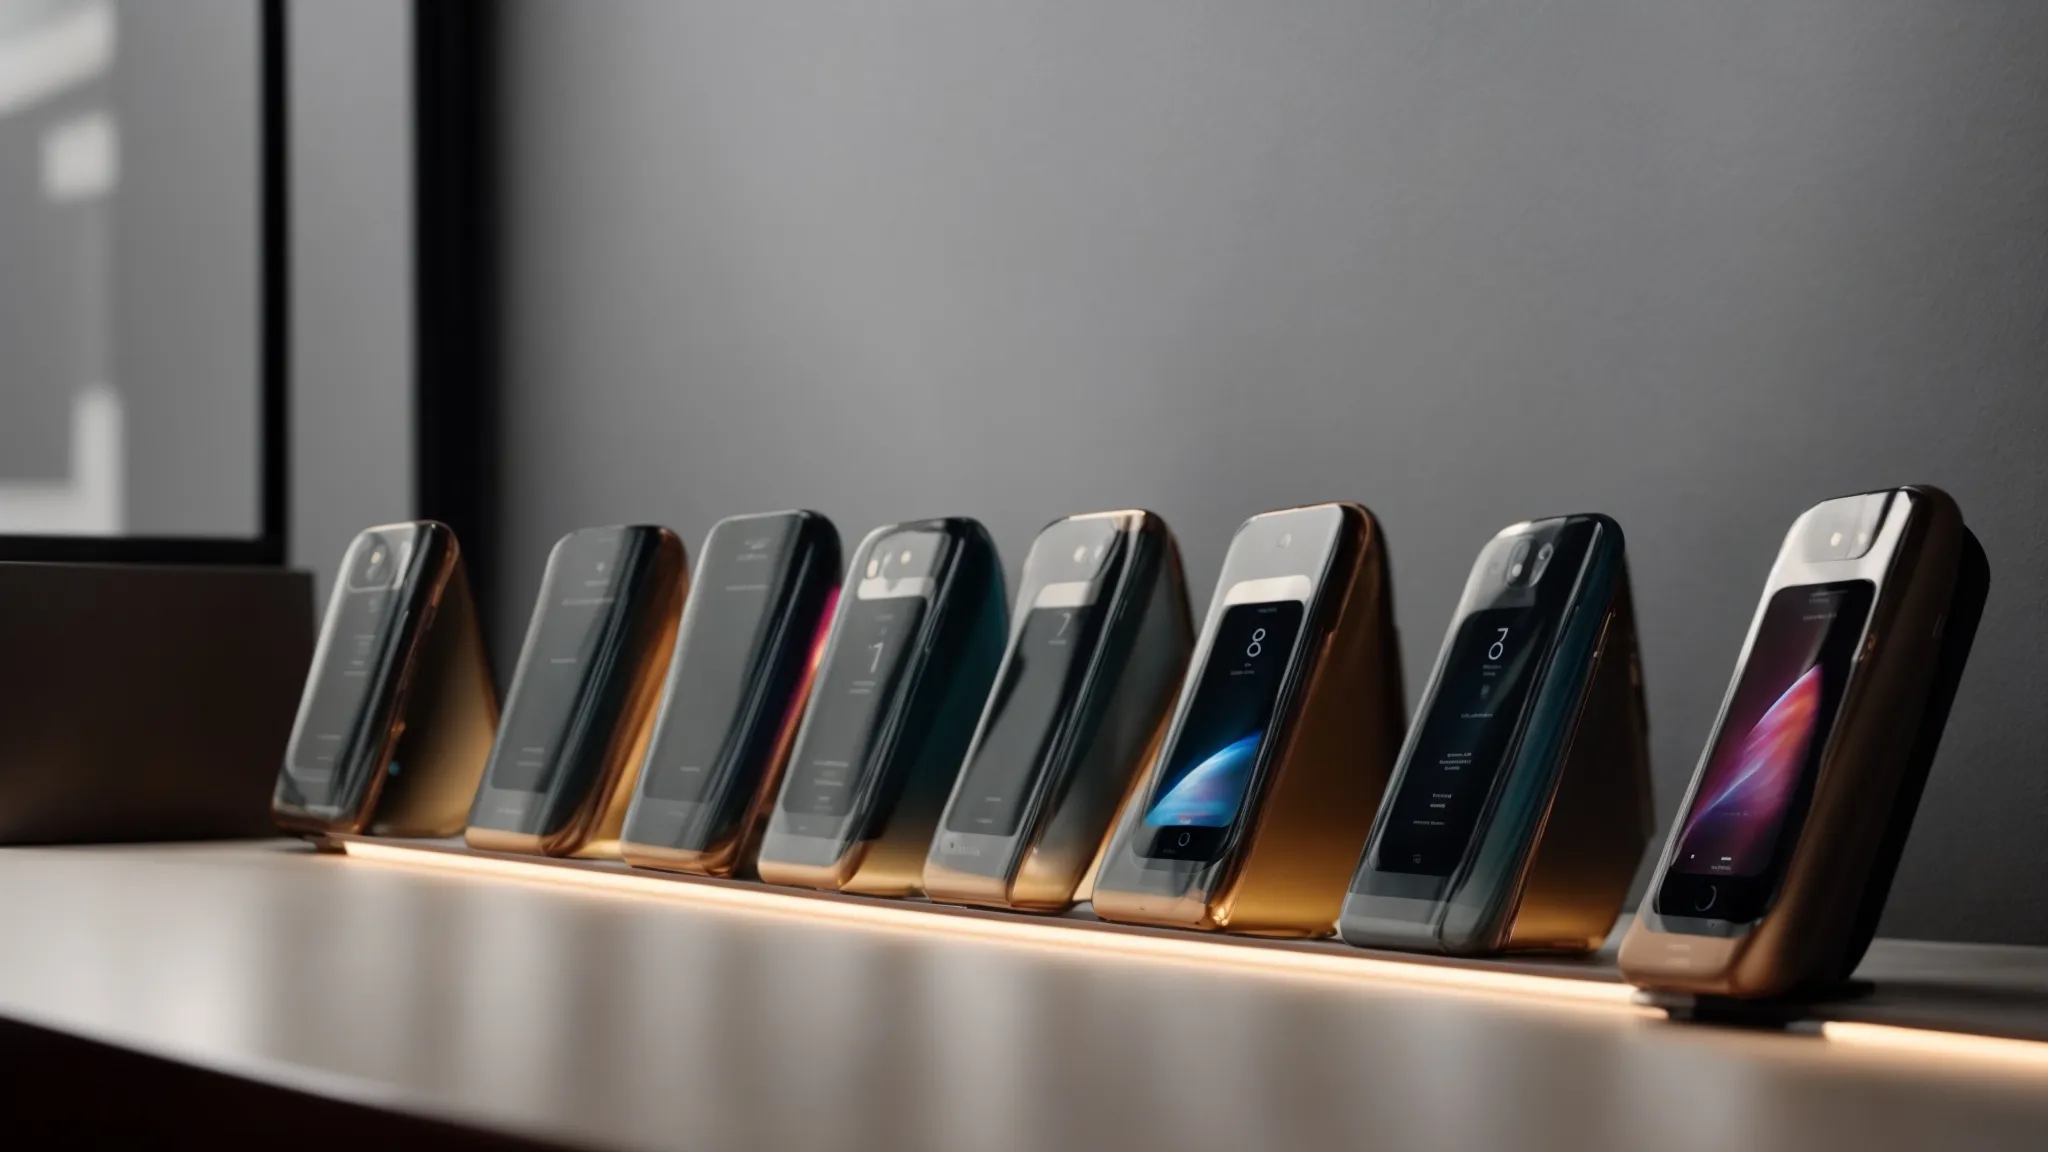 a lineup of sleek vortex smartphones resting on a minimalist showcase, gleaming under soft lighting.